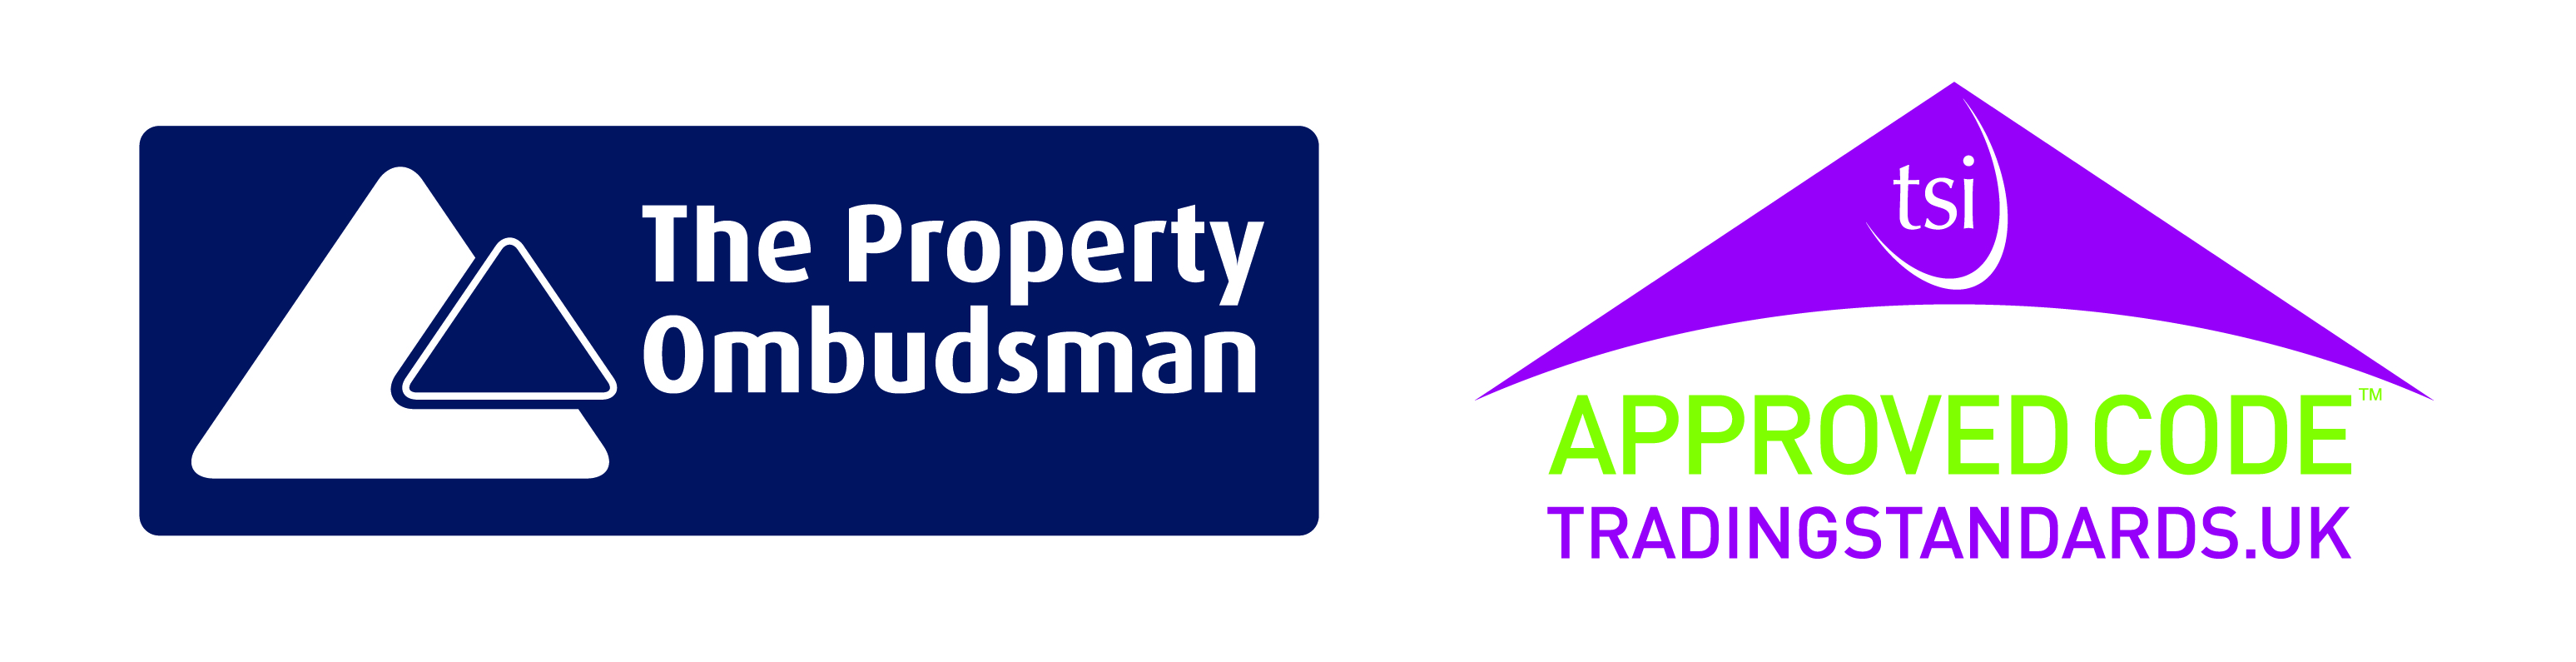 Property Ombudsman Image